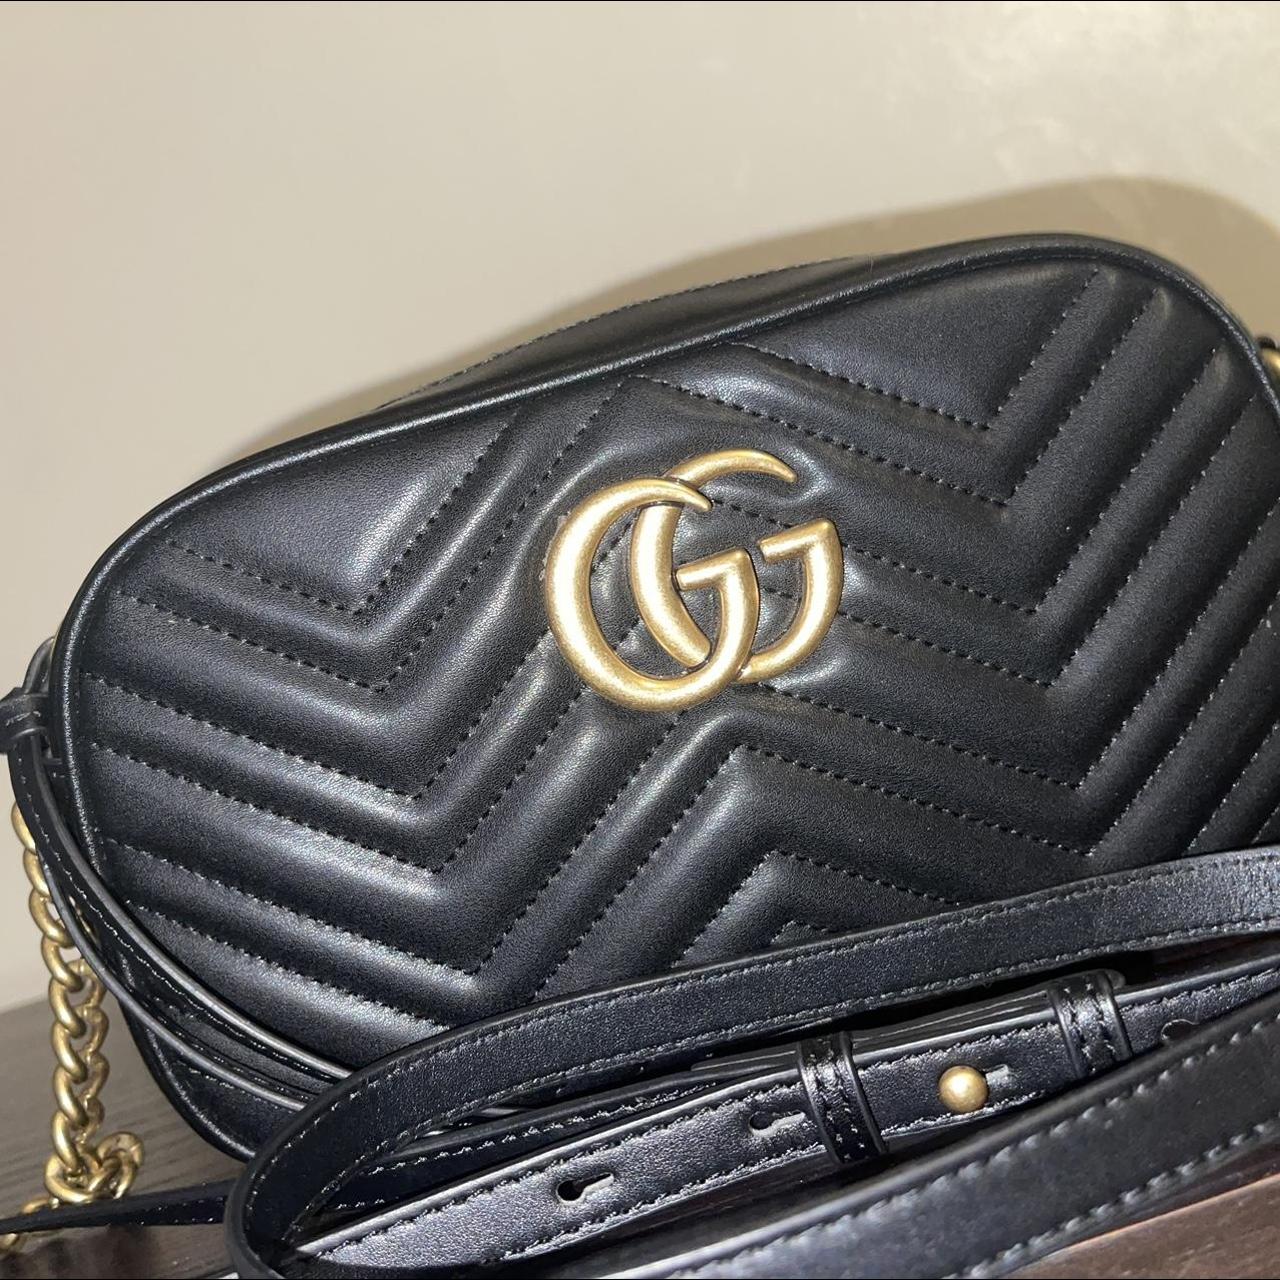 Gucci Boston Leather Handbag AND matching wallet - Depop